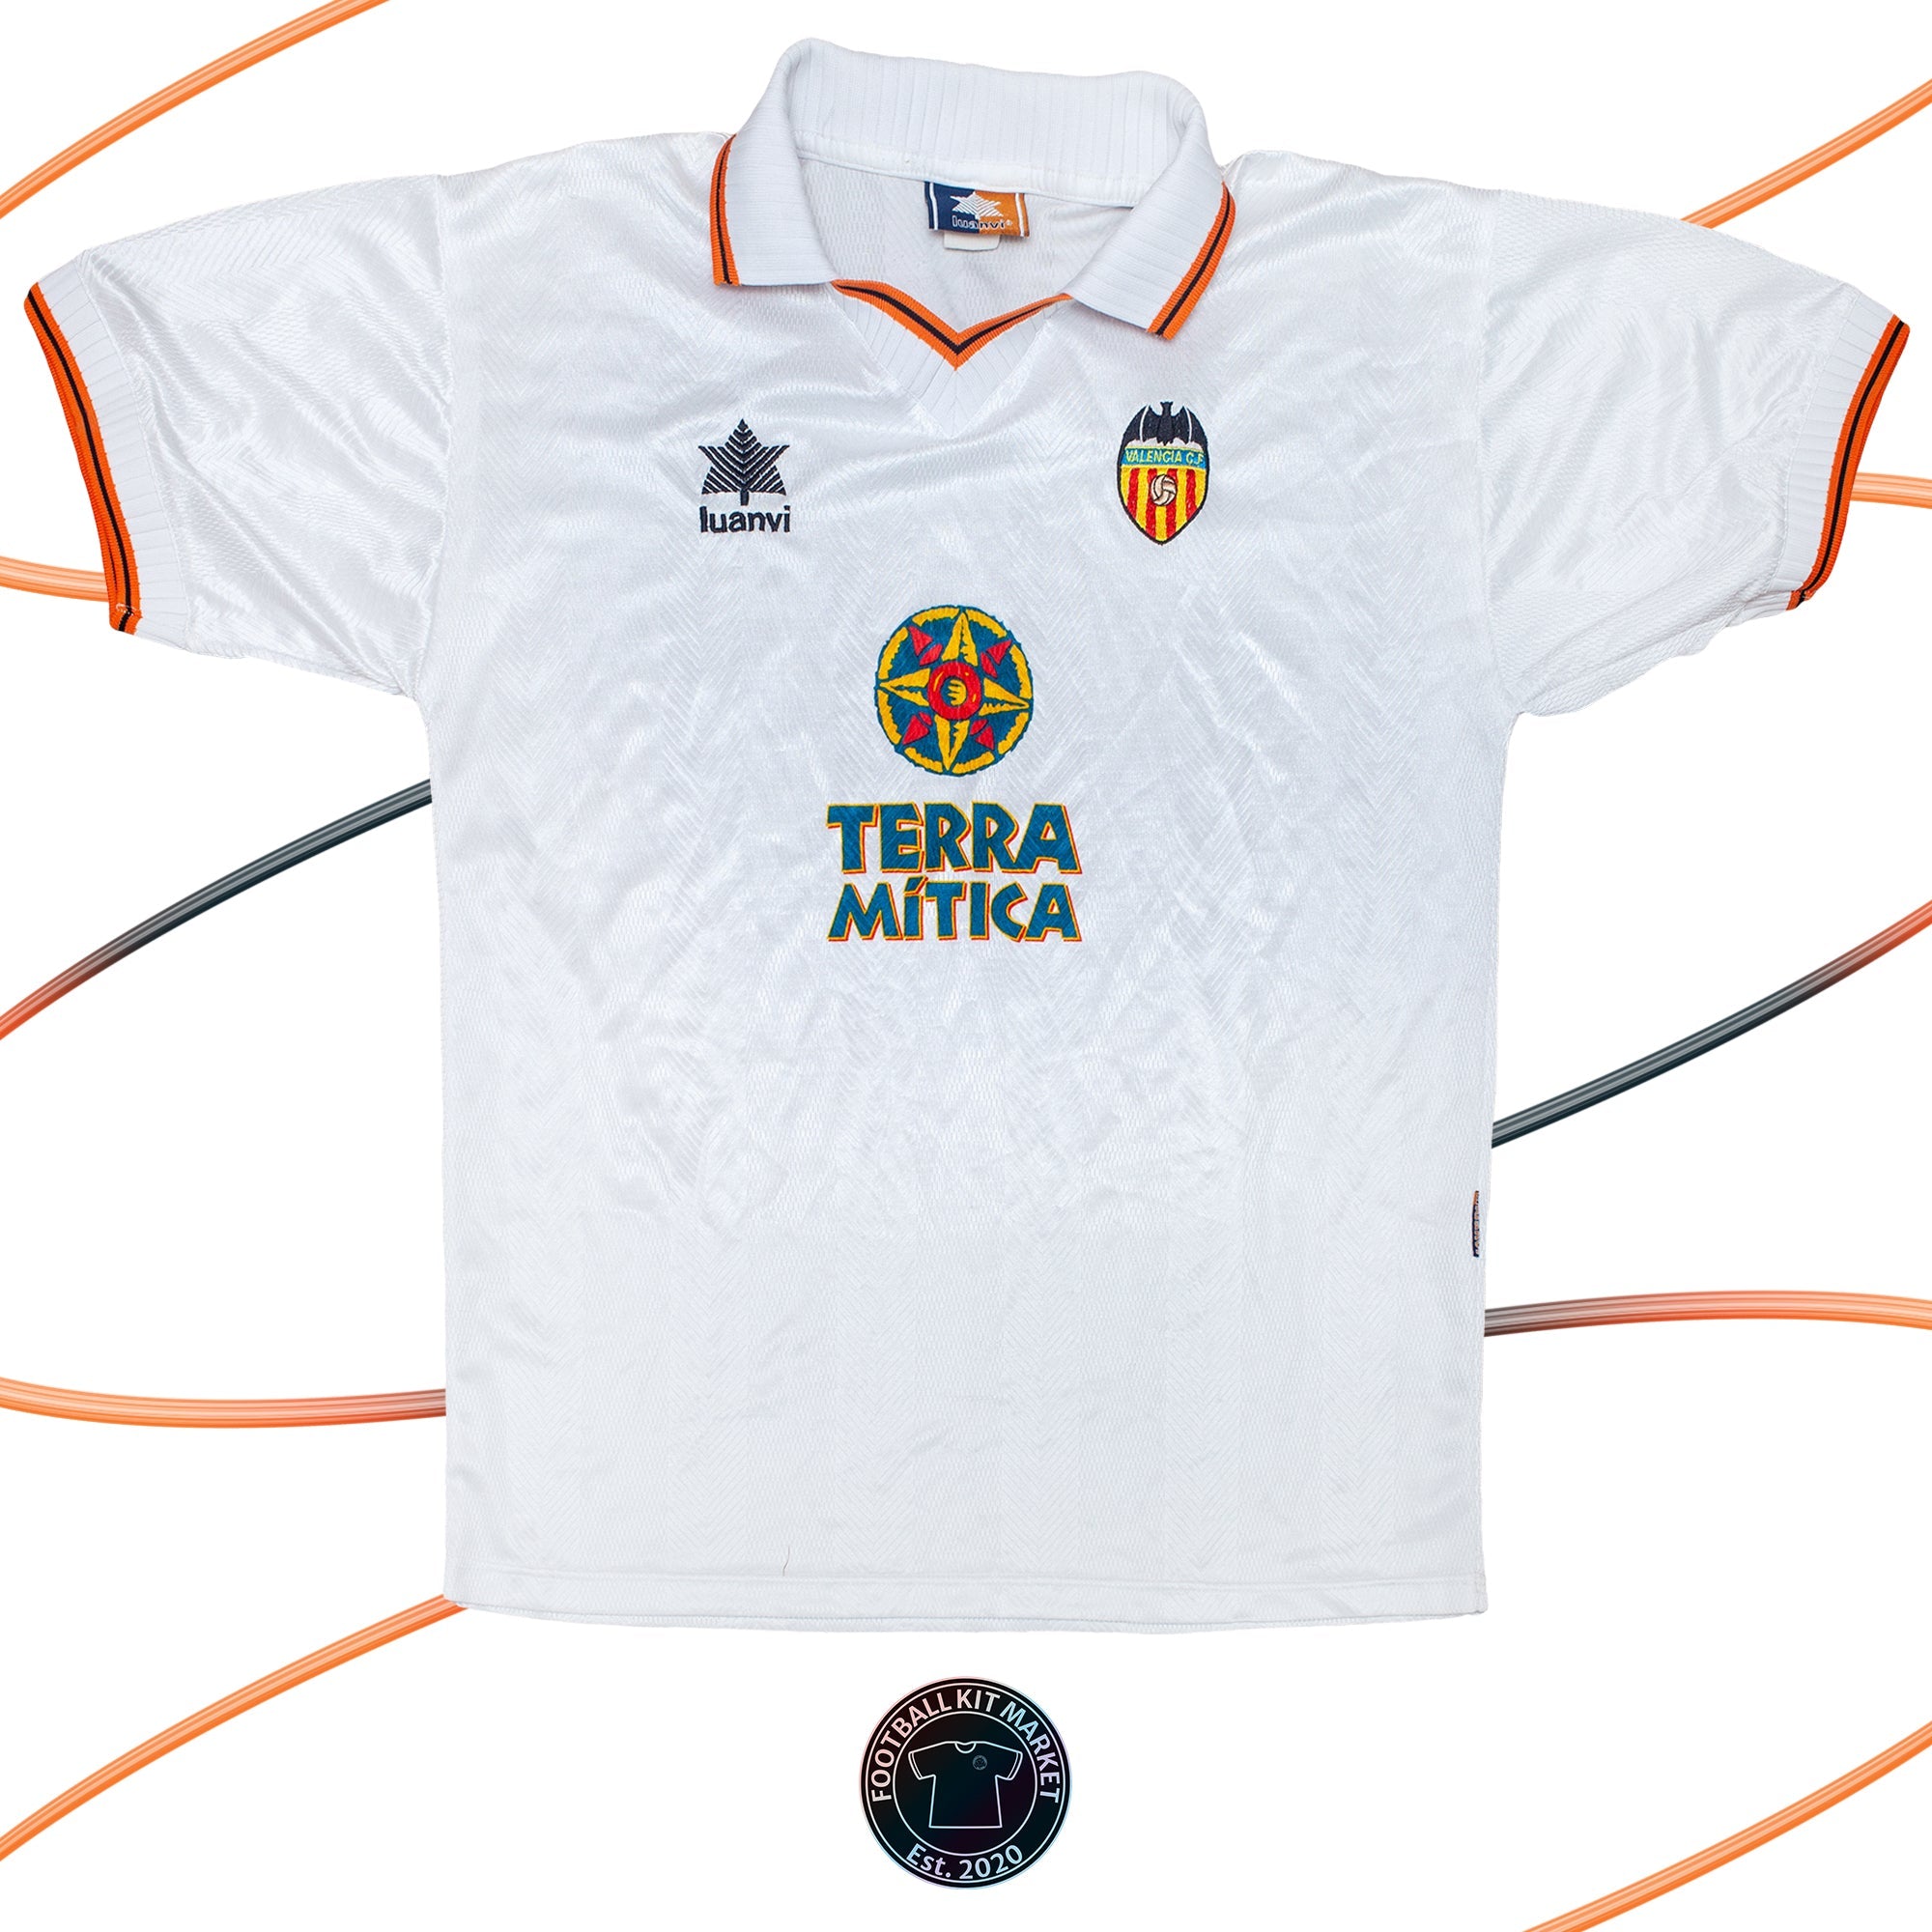 Genuine VALENCIA Home Shirt (1998-1999) - IUANVI (XL) - Product Image from Football Kit Market